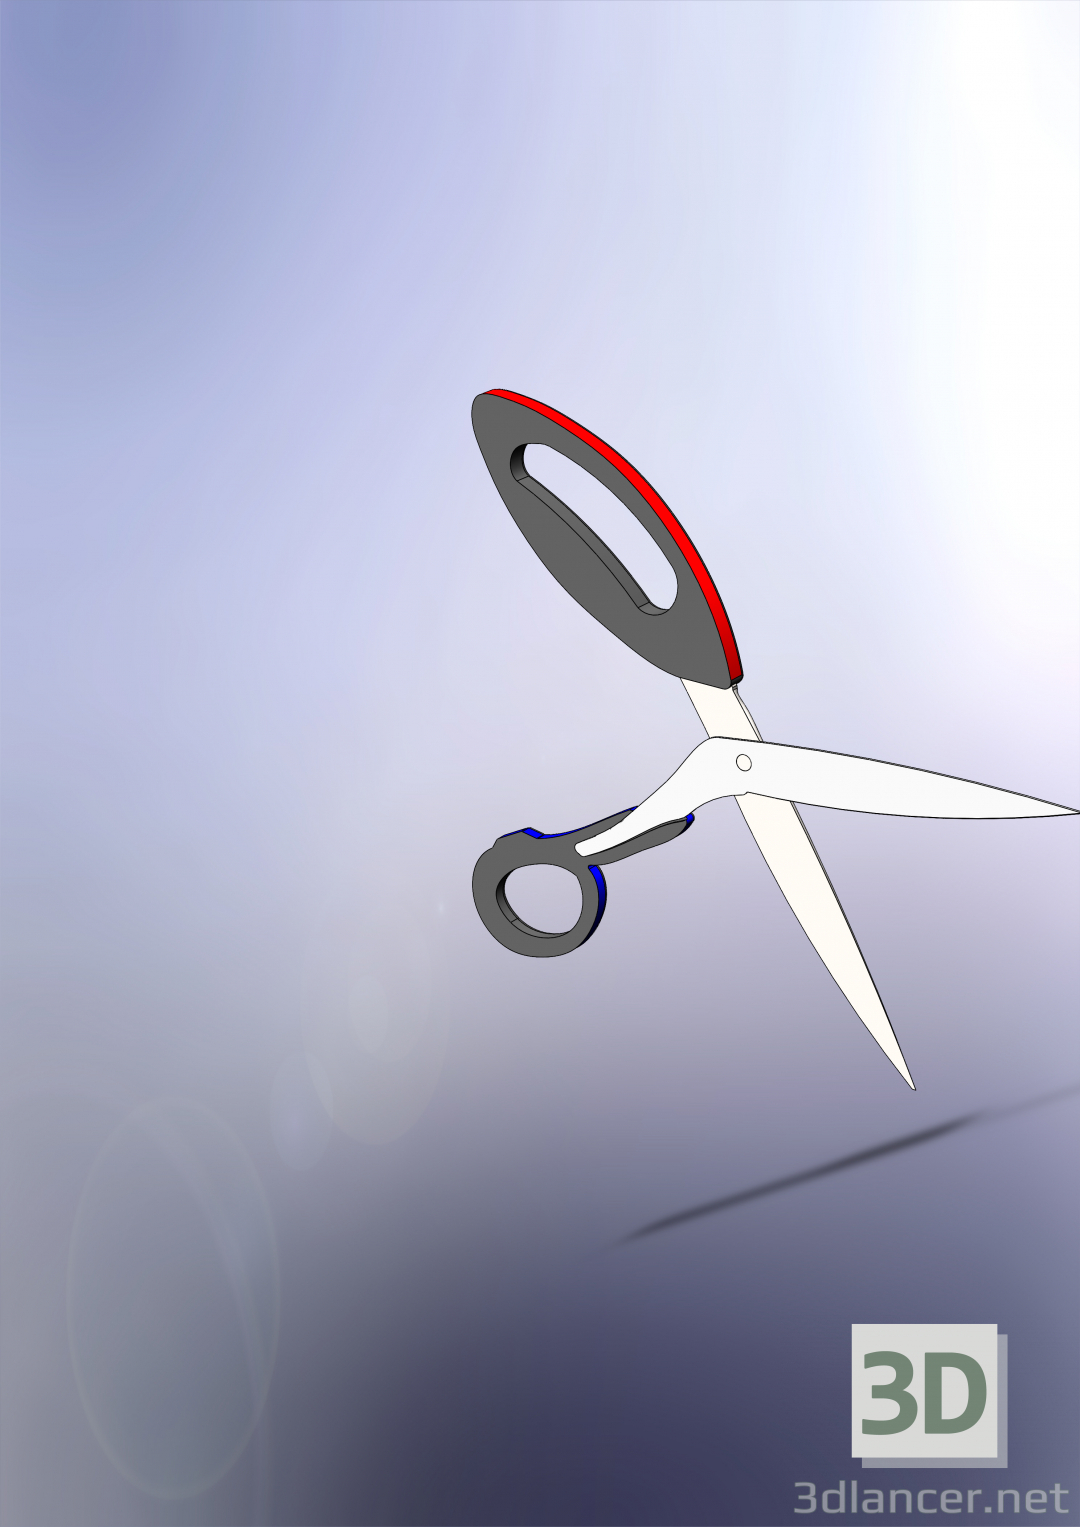 3d Fabric cutting scissors model buy - render